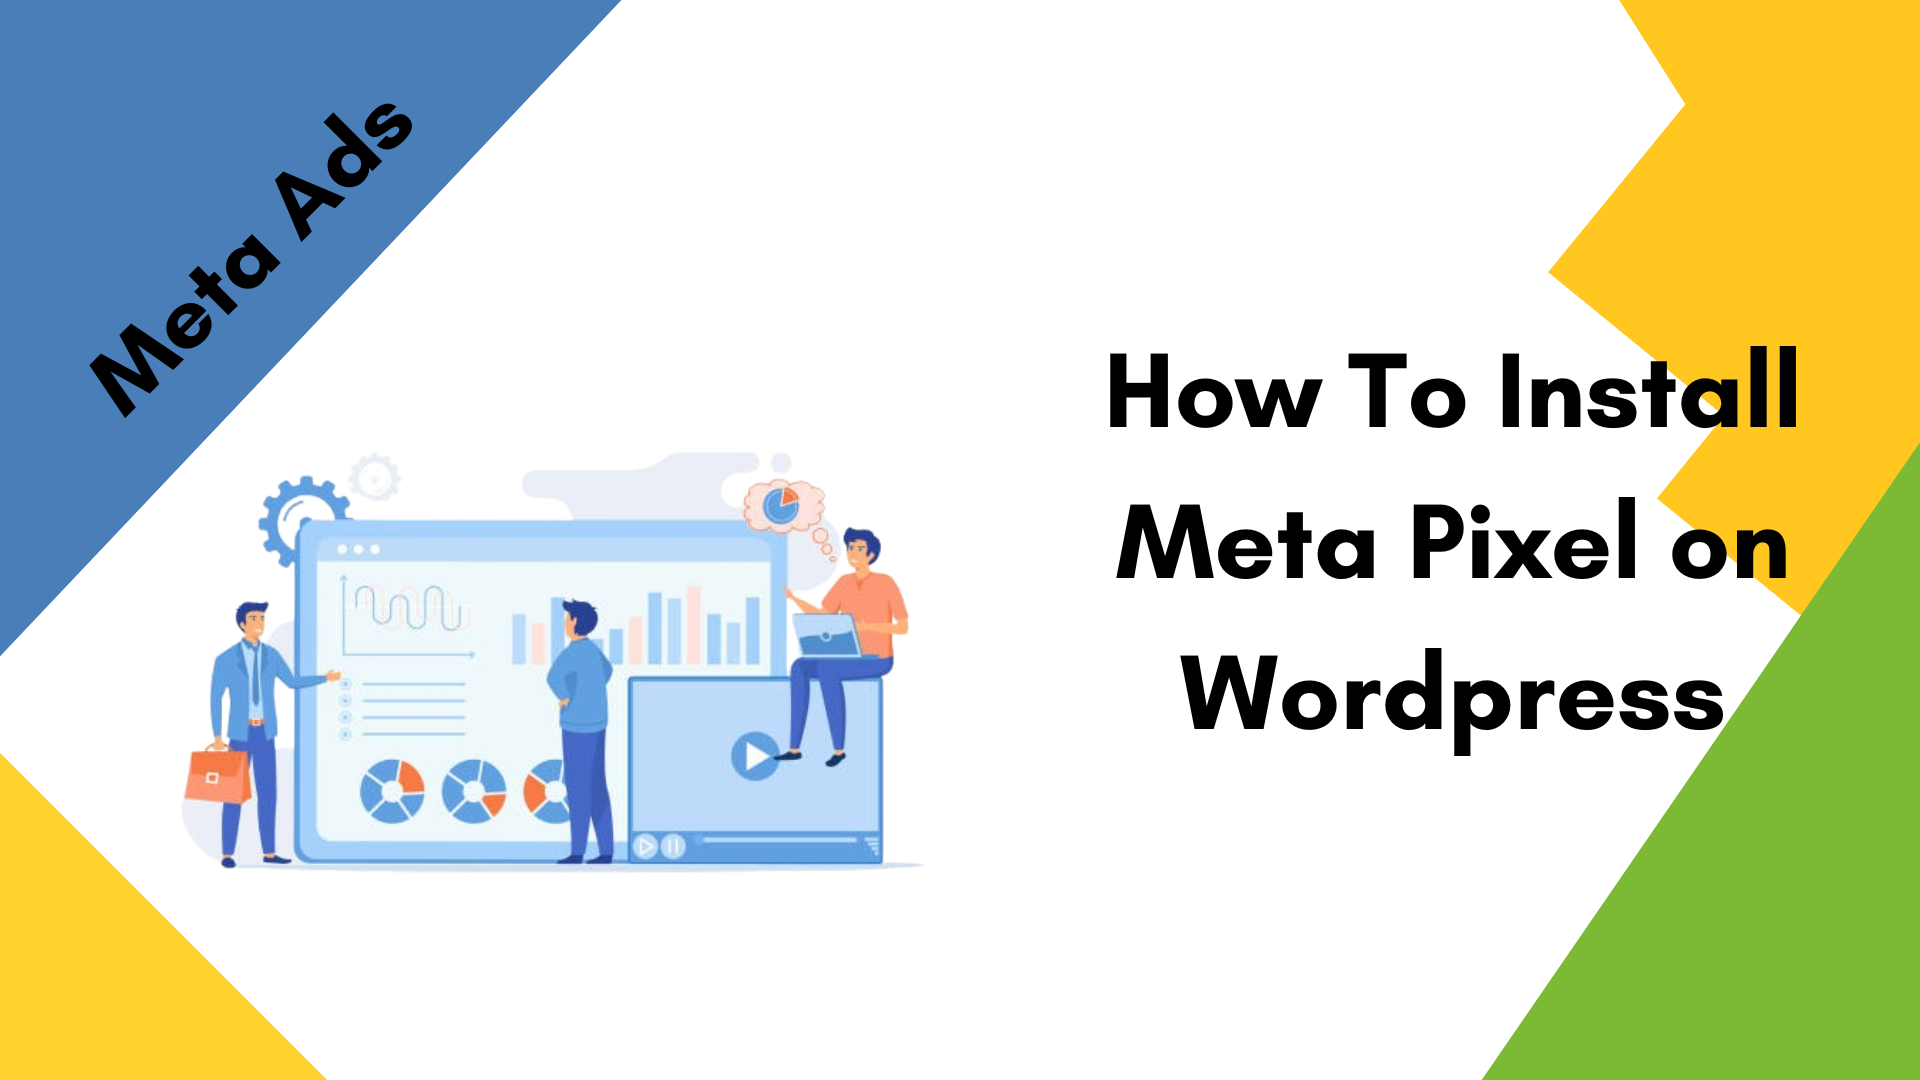 How To Install Meta Pixel on Wordpress